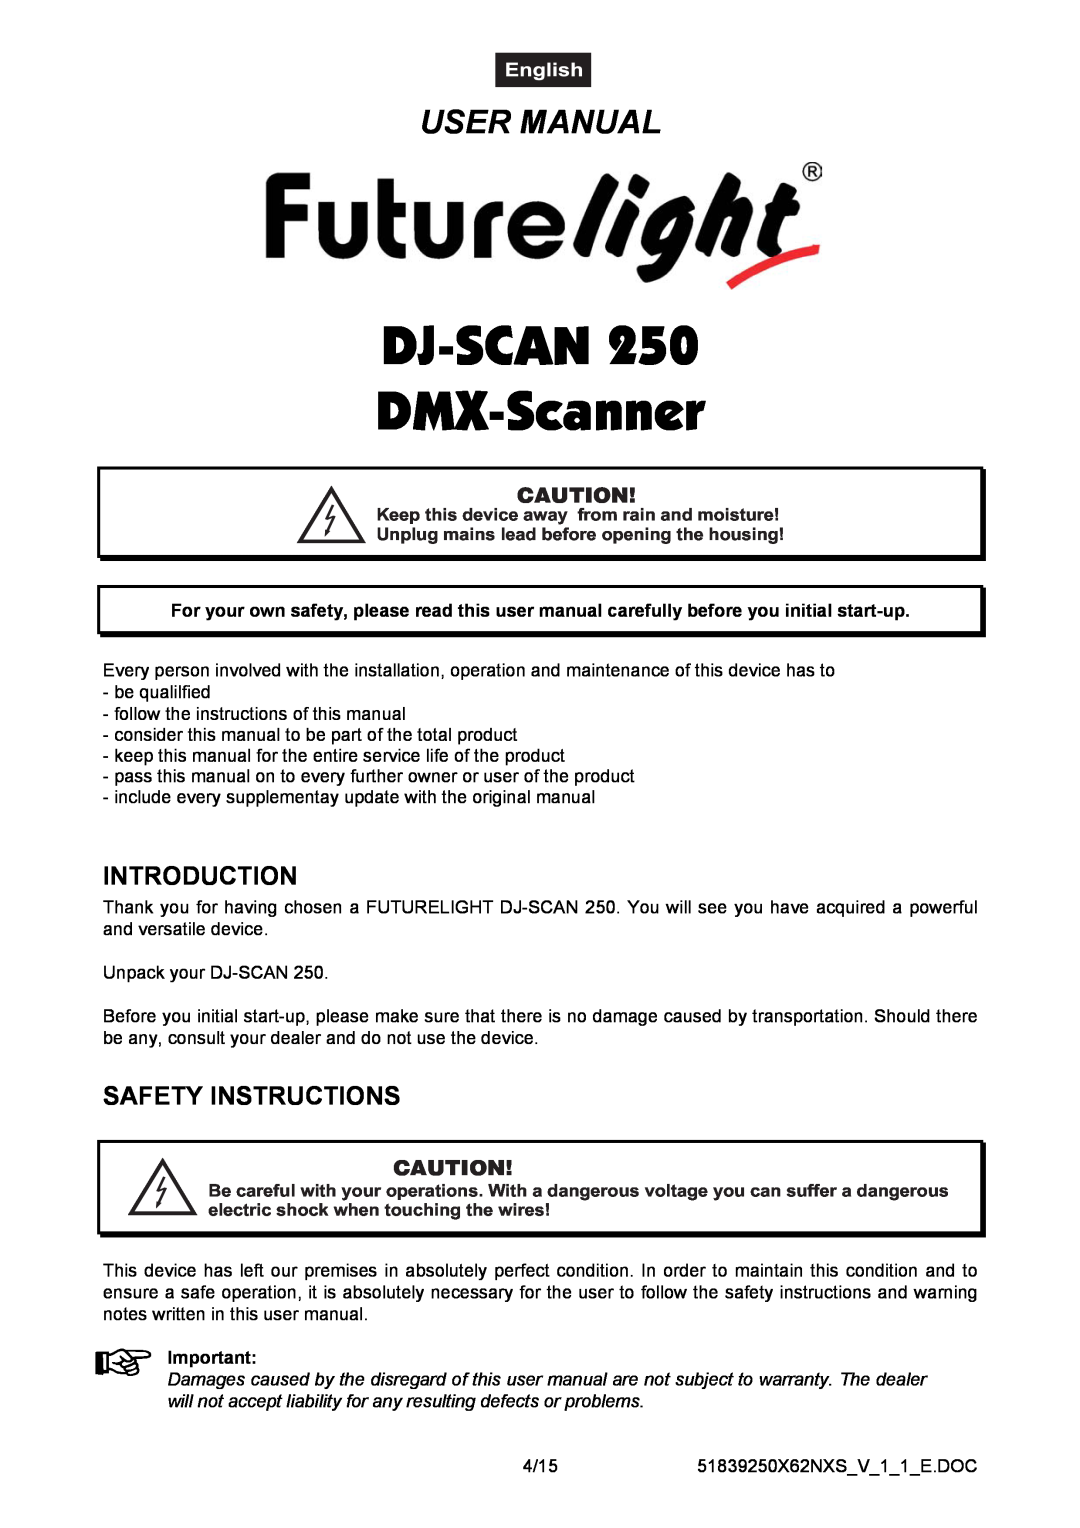 Futuretech 250 user manual Introduction, Safety Instructions, DJ-SCAN DMX-Scanner, User Manual 